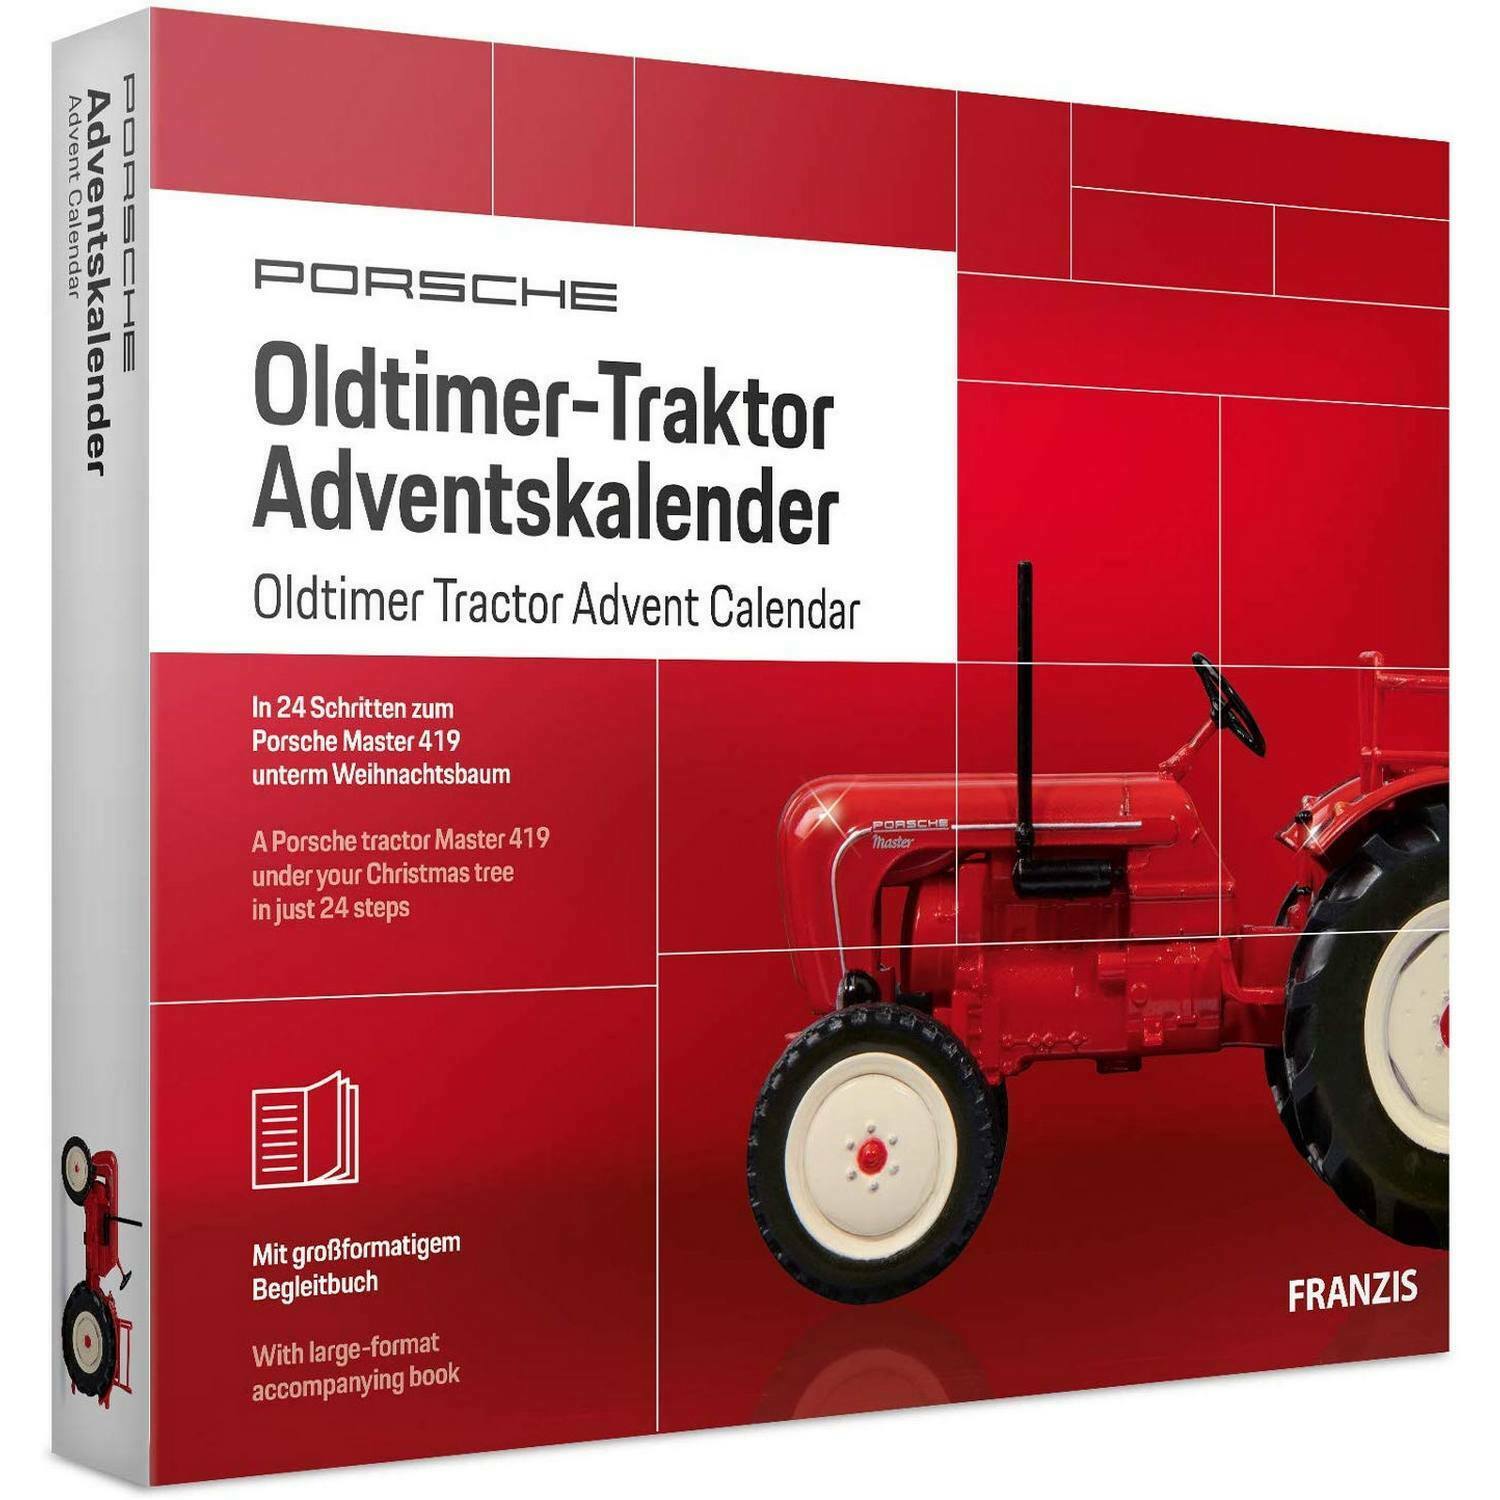 Oldtimer-Traktor adventskalender.